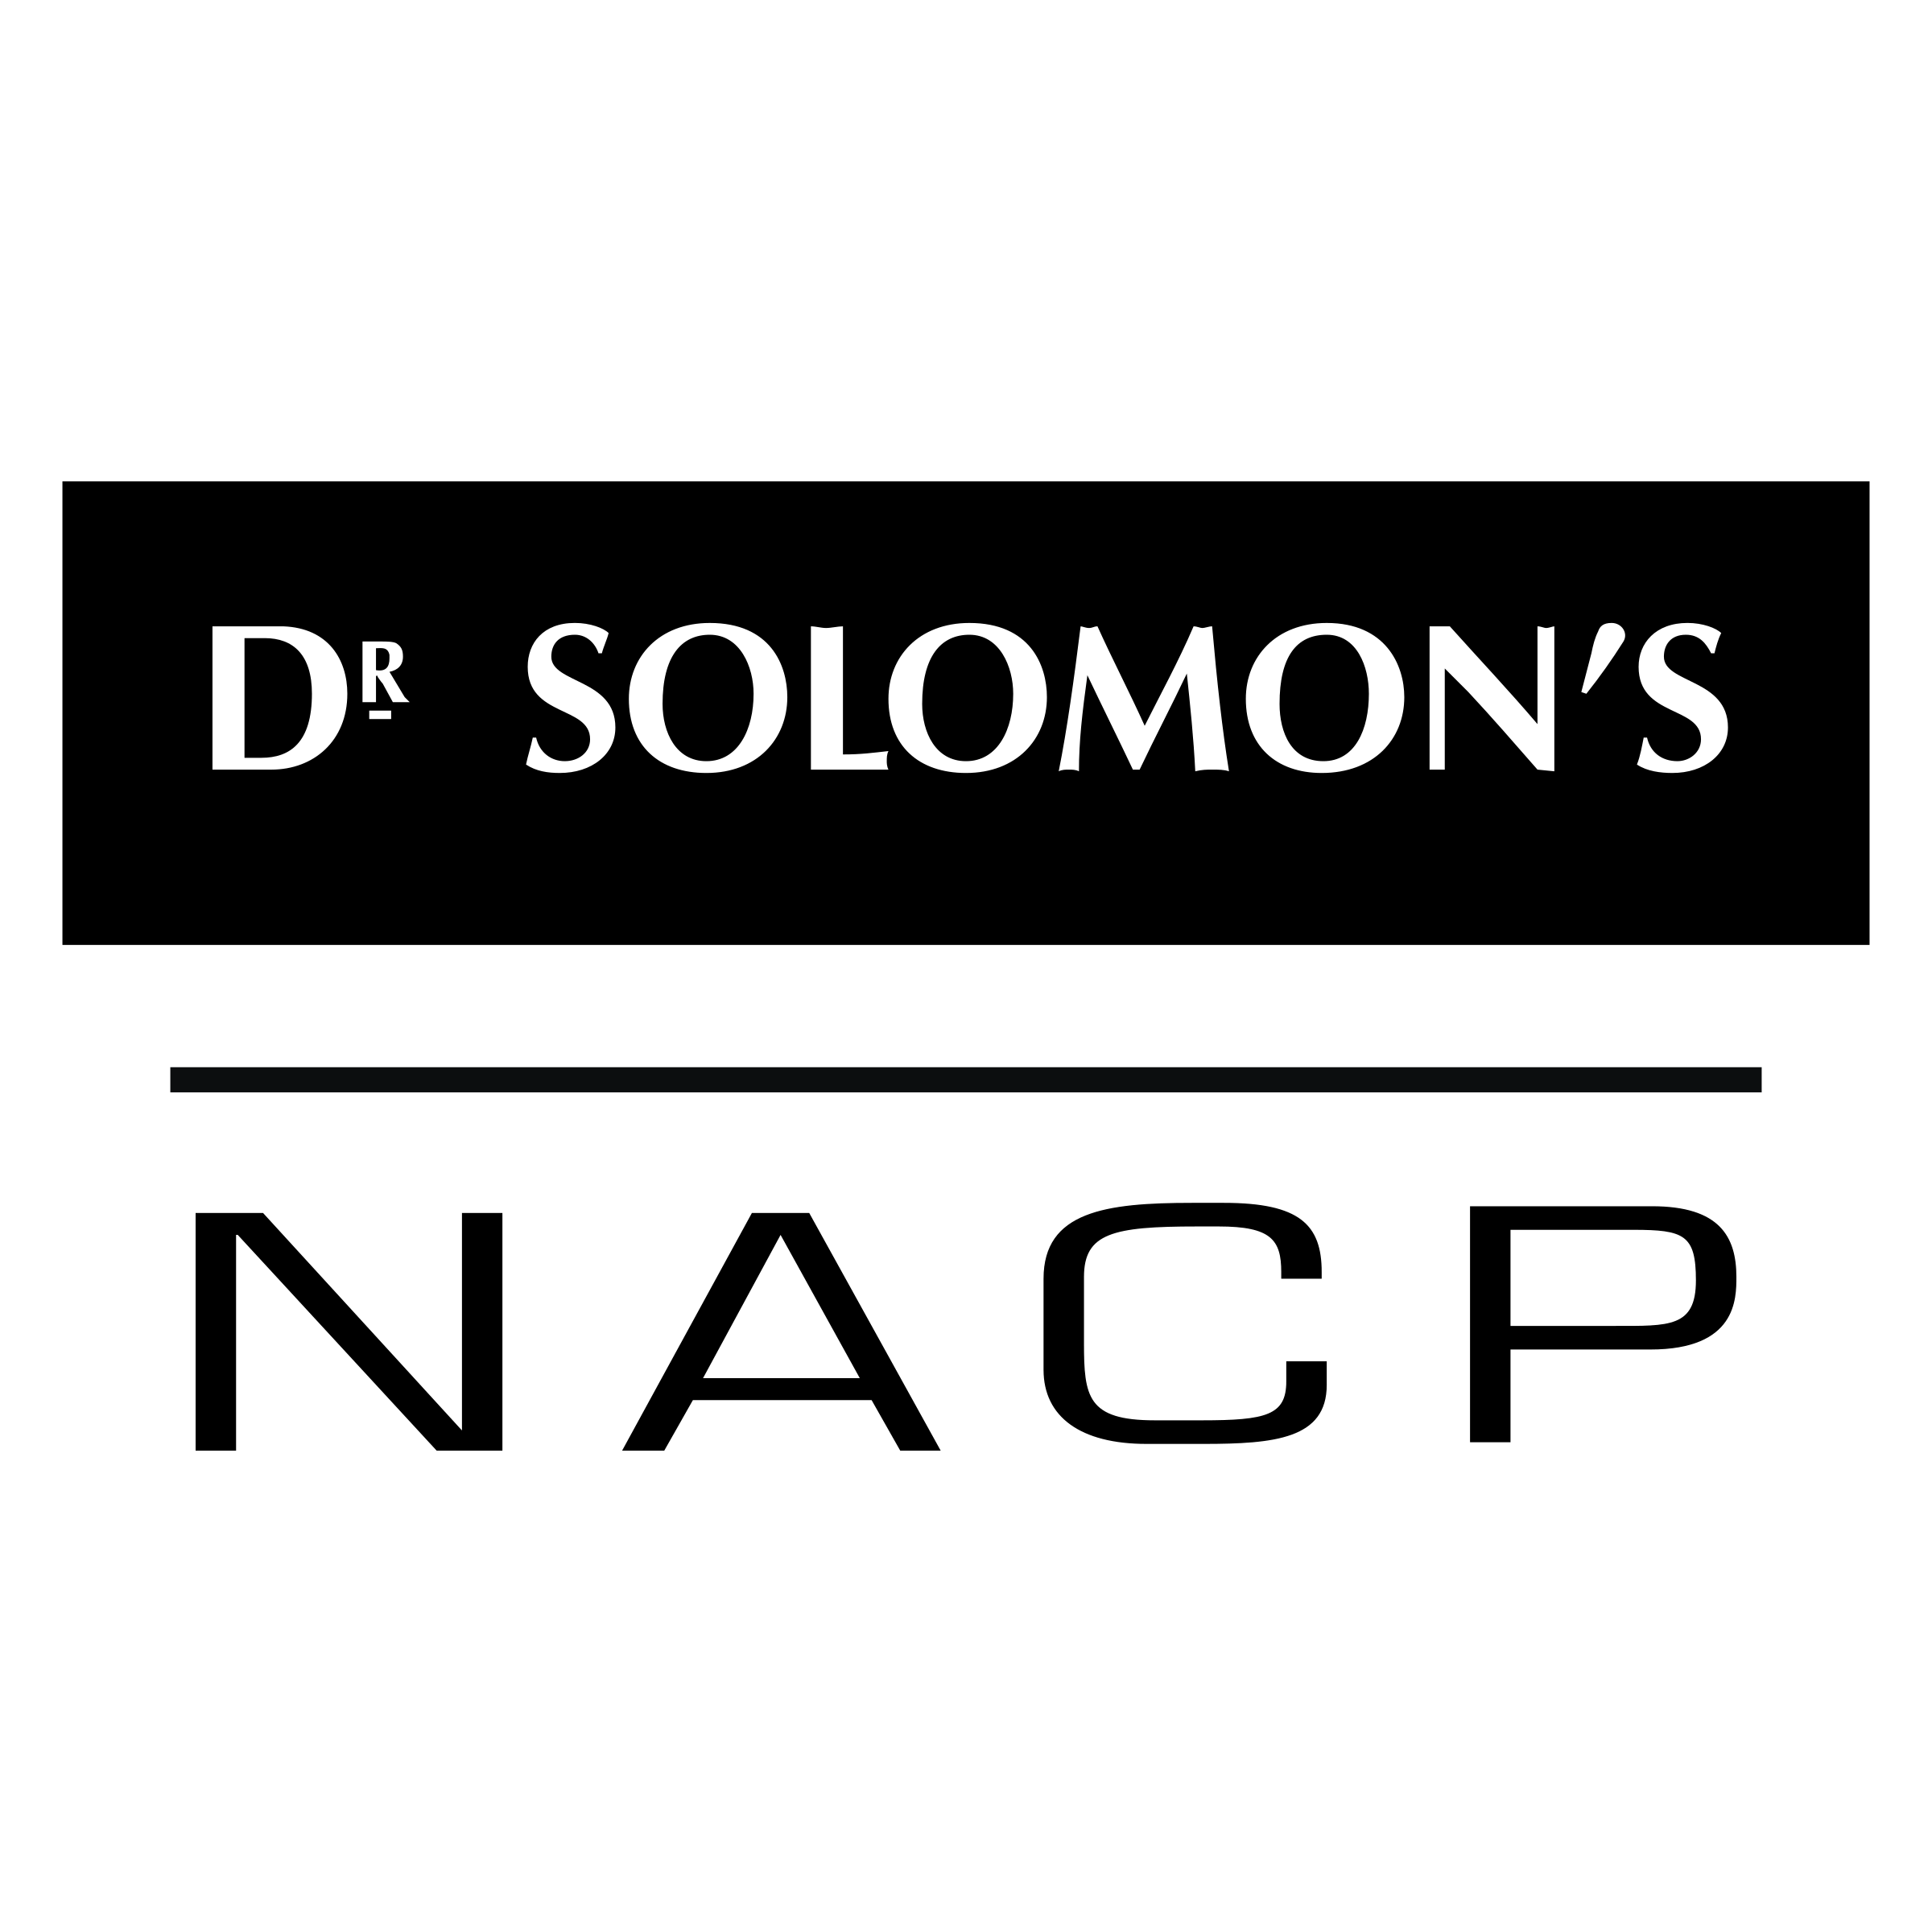 Solomon Logo - Dr Solomon's Logo PNG Transparent & SVG Vector - Freebie Supply